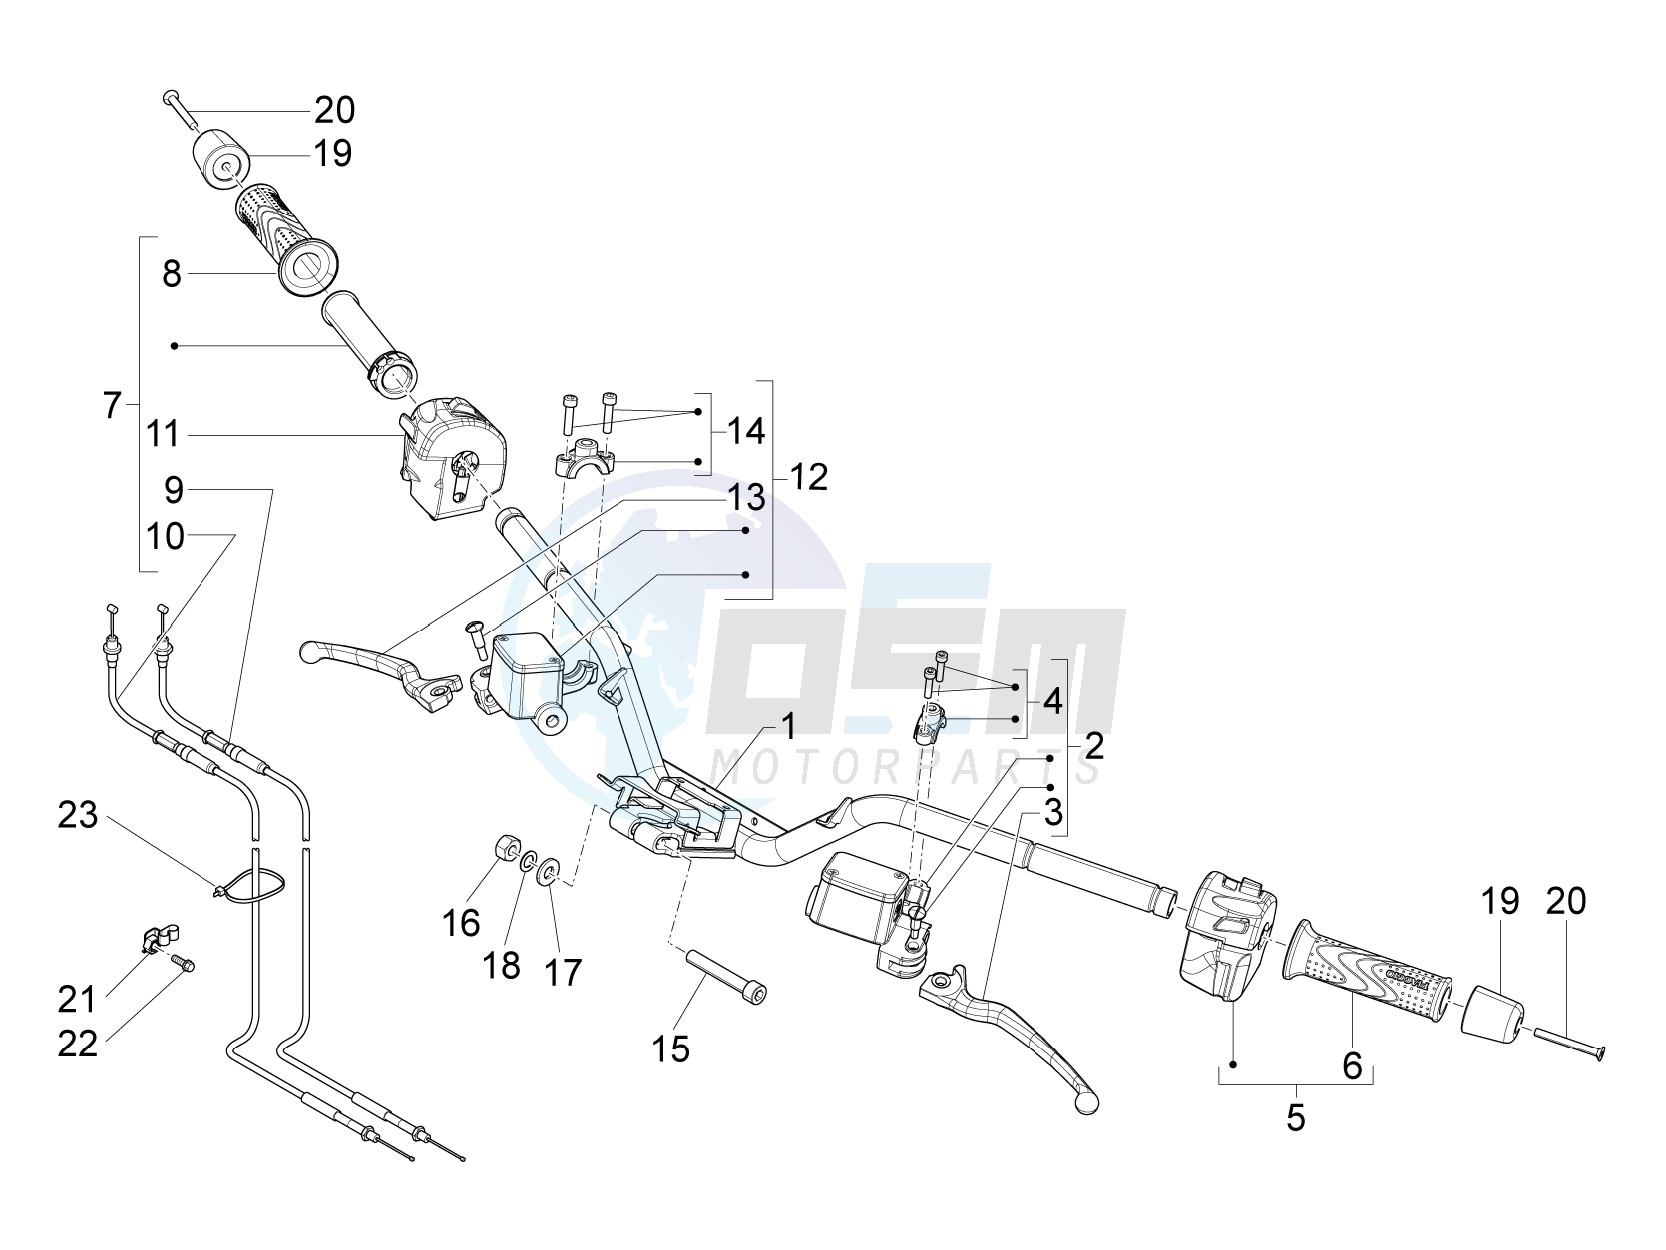 Handlebars - Master cilinder blueprint